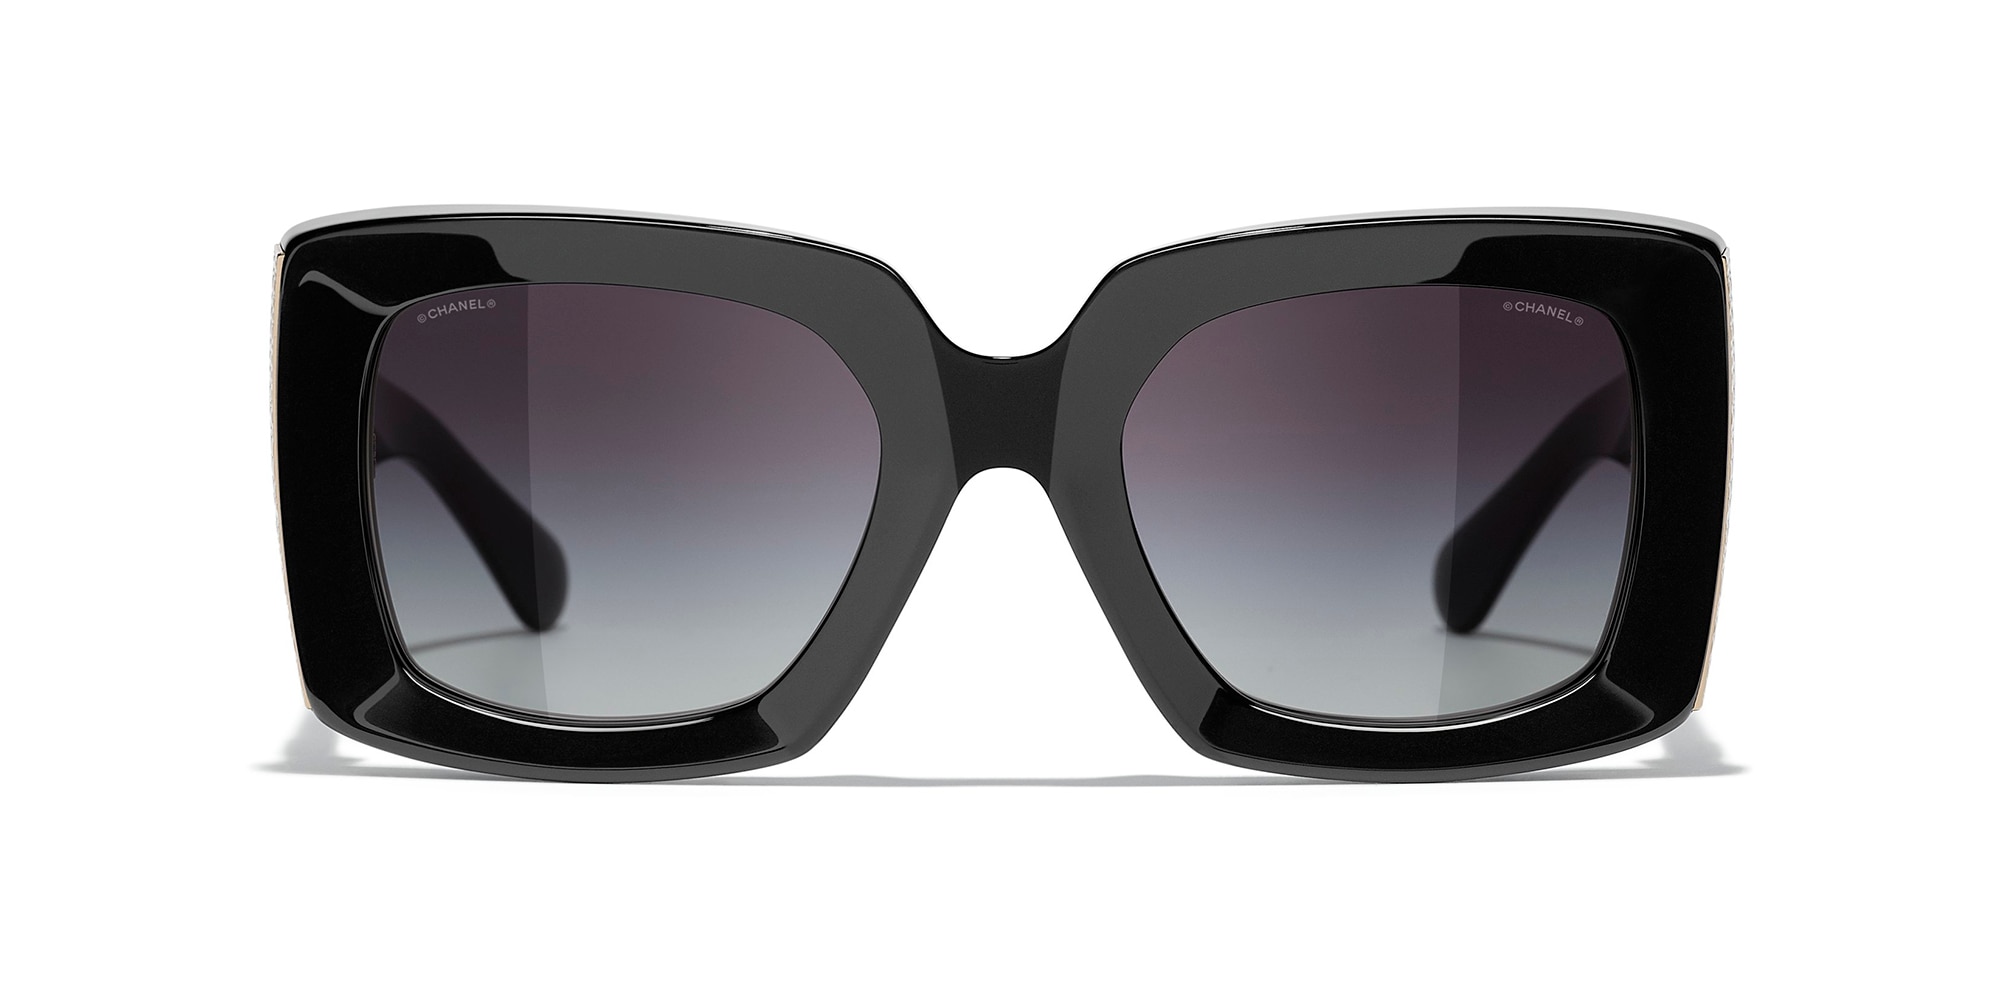 Sunglasses Oval Sunglasses acetate  strass  Fashion  CHANEL